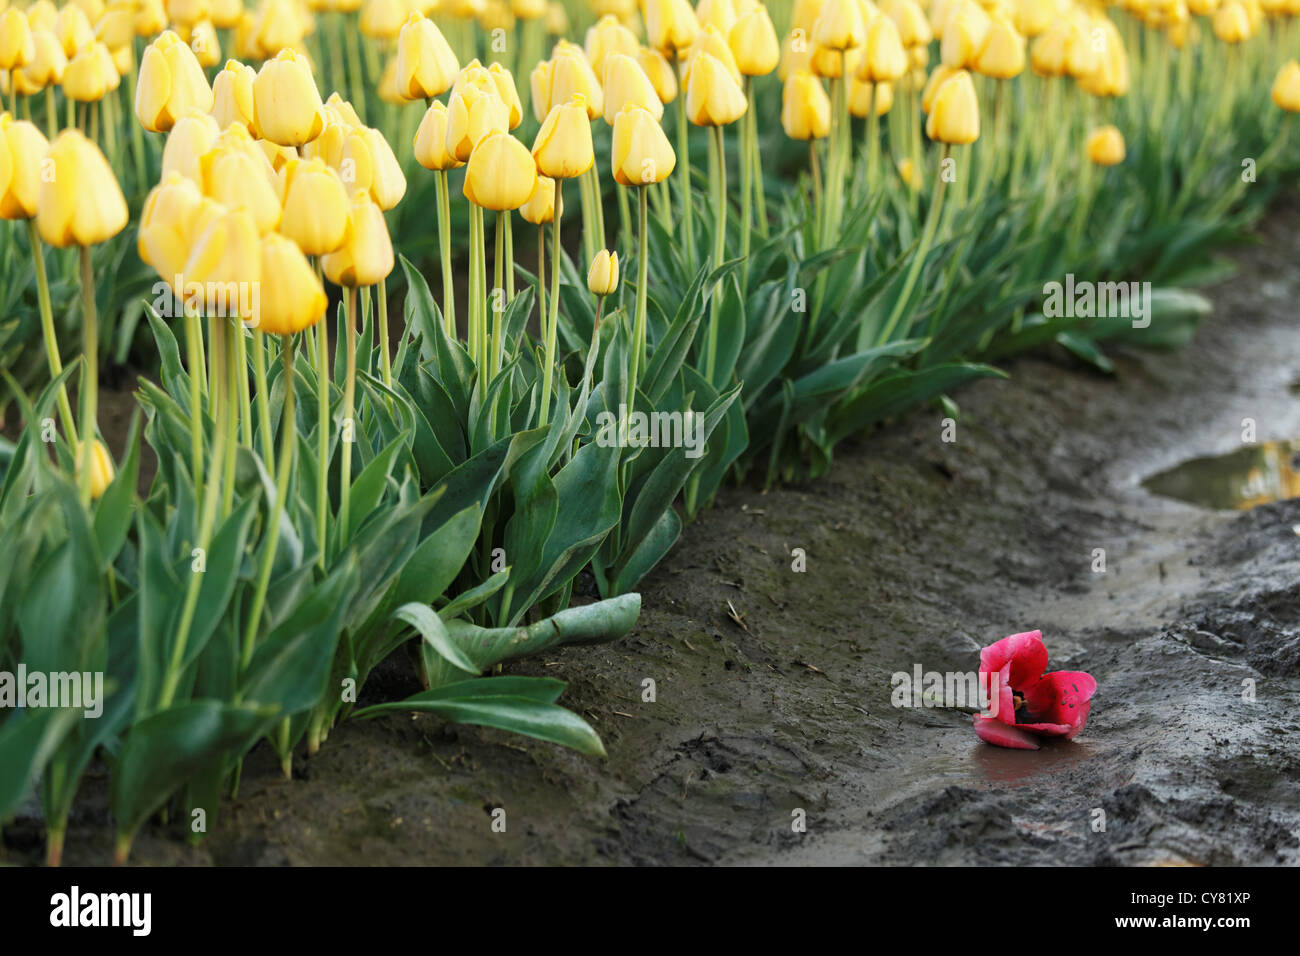 A single red tulip fallen amongst a row of yellow tulips, Mount Vernon, Skagit Valley, Skagit County, Washington, USA Stock Photo